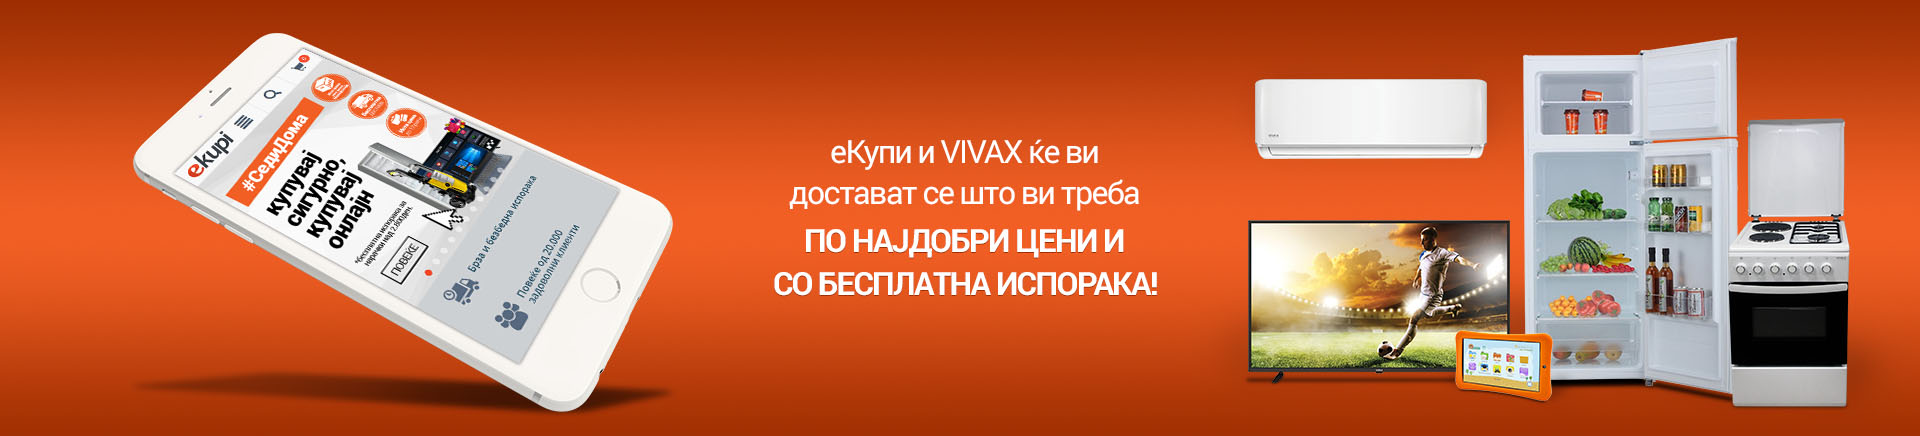 MK_ekupi_vivax_LANDING_DESKTOP 1200 X 436.jpg